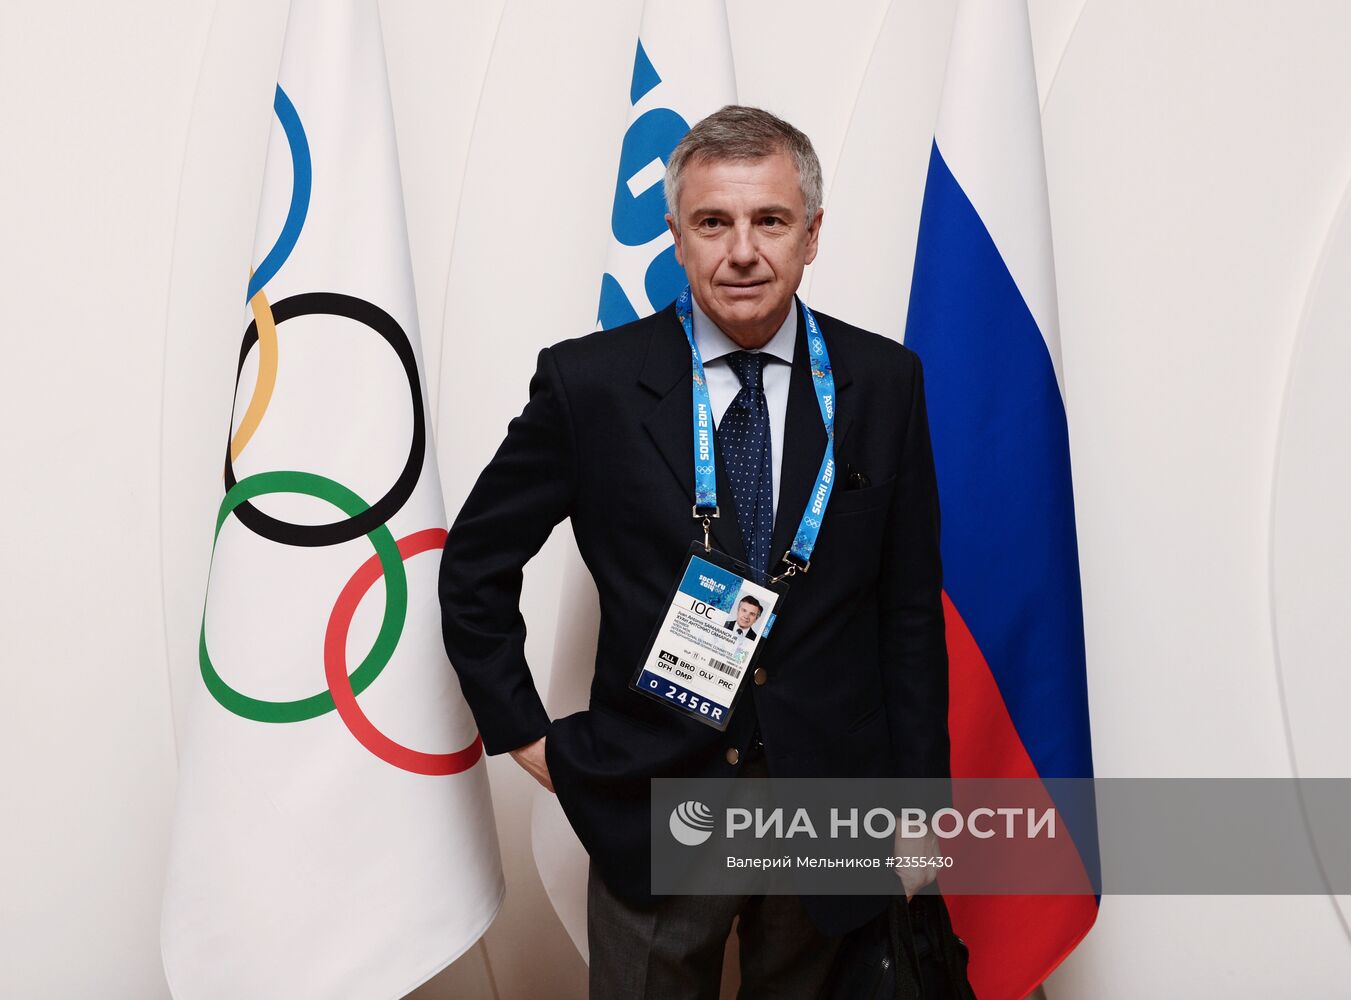 Заседание Исполкома Междунароного олимпийского комитета